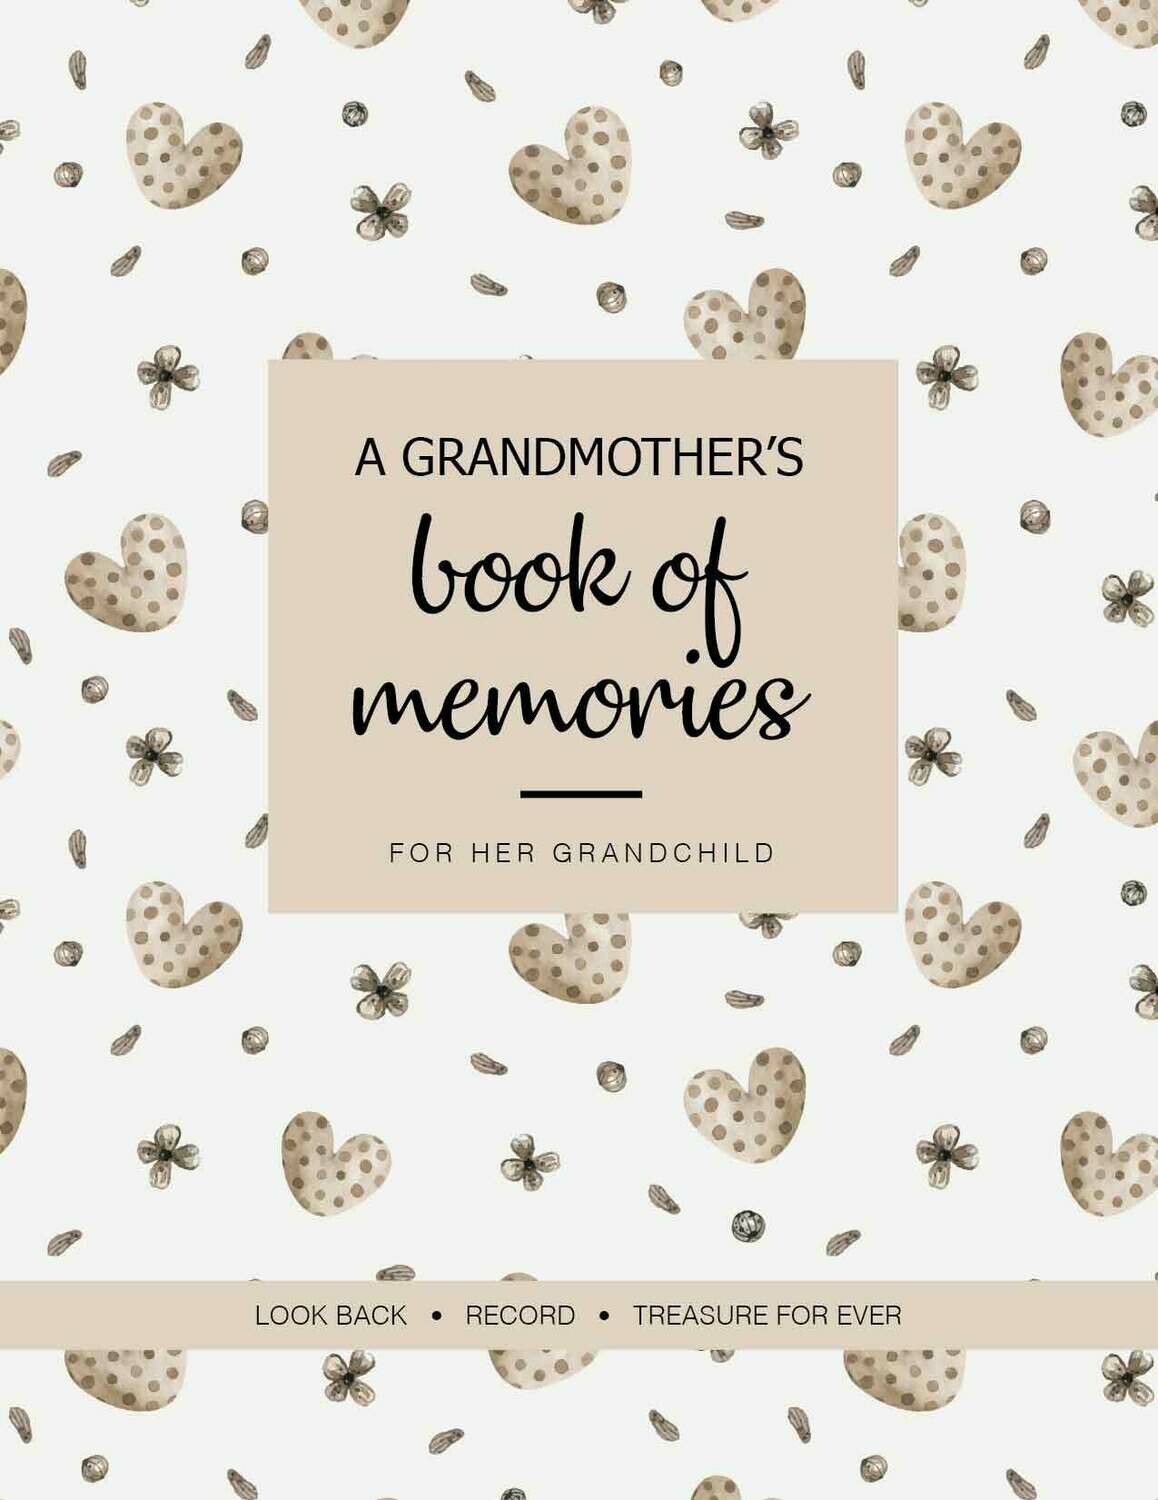 Grandma's book - Ouma se book